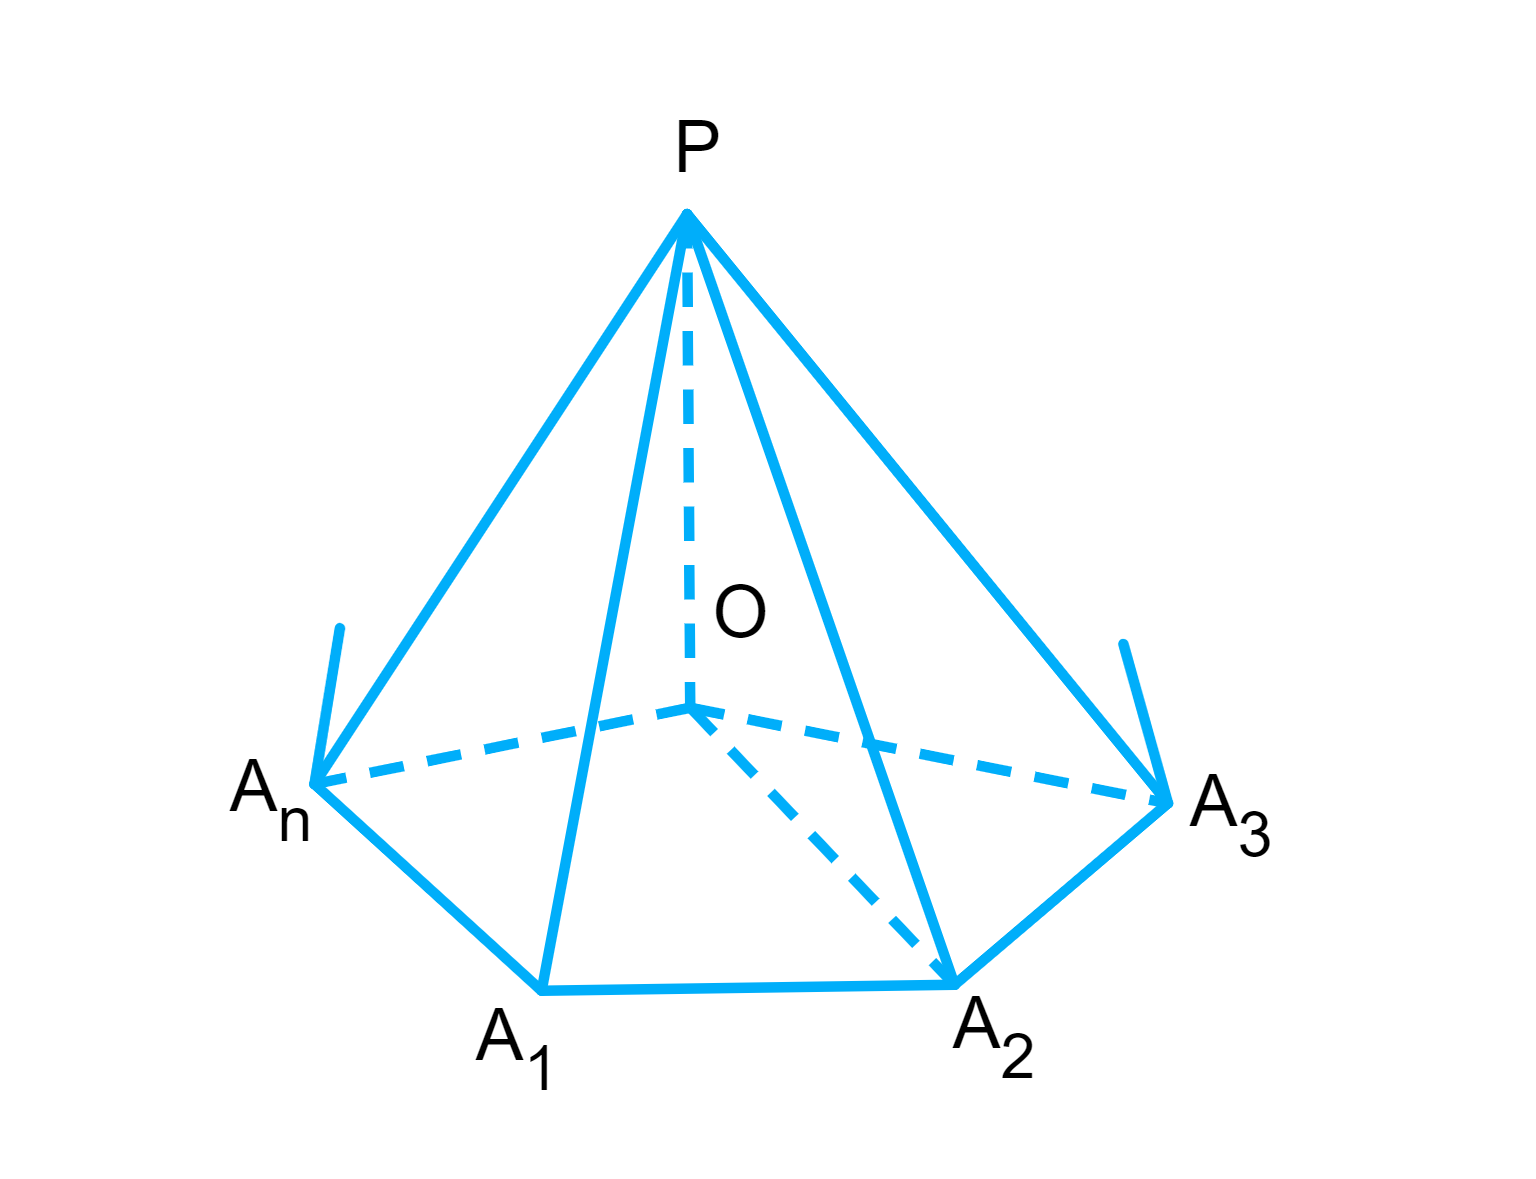 Пирамида геометрия 10 класс атанасян презентация